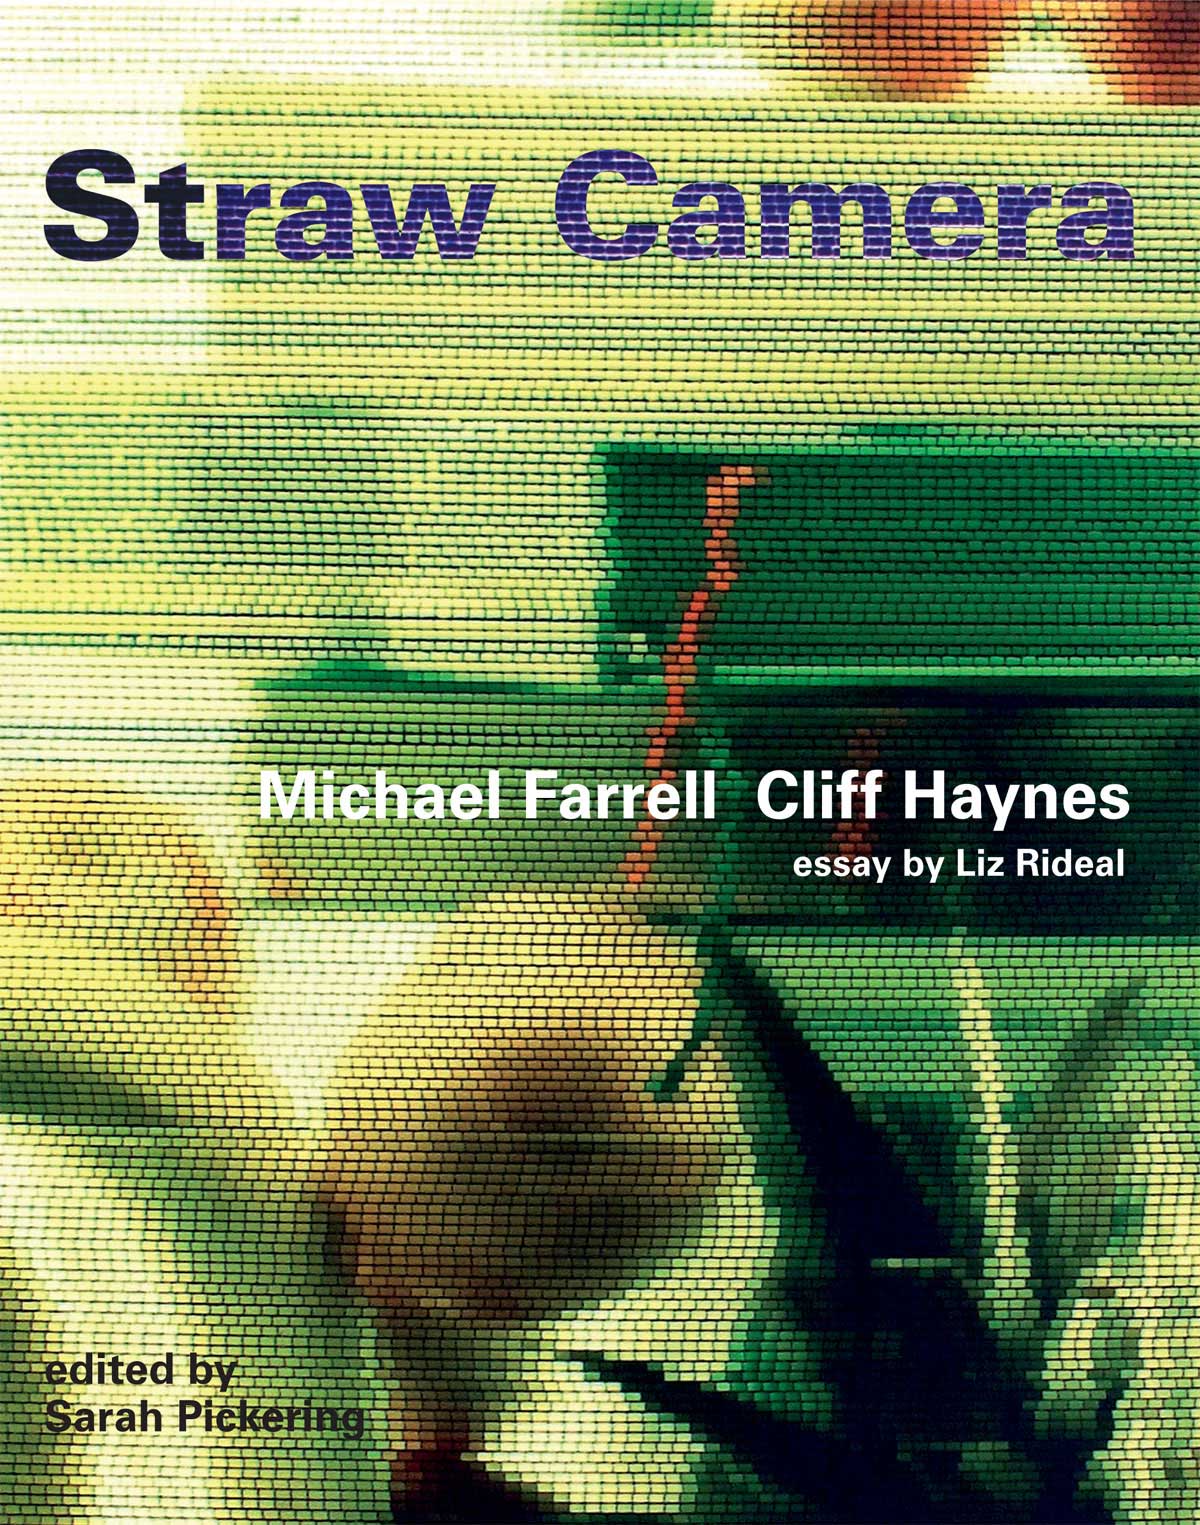 Straw Camera